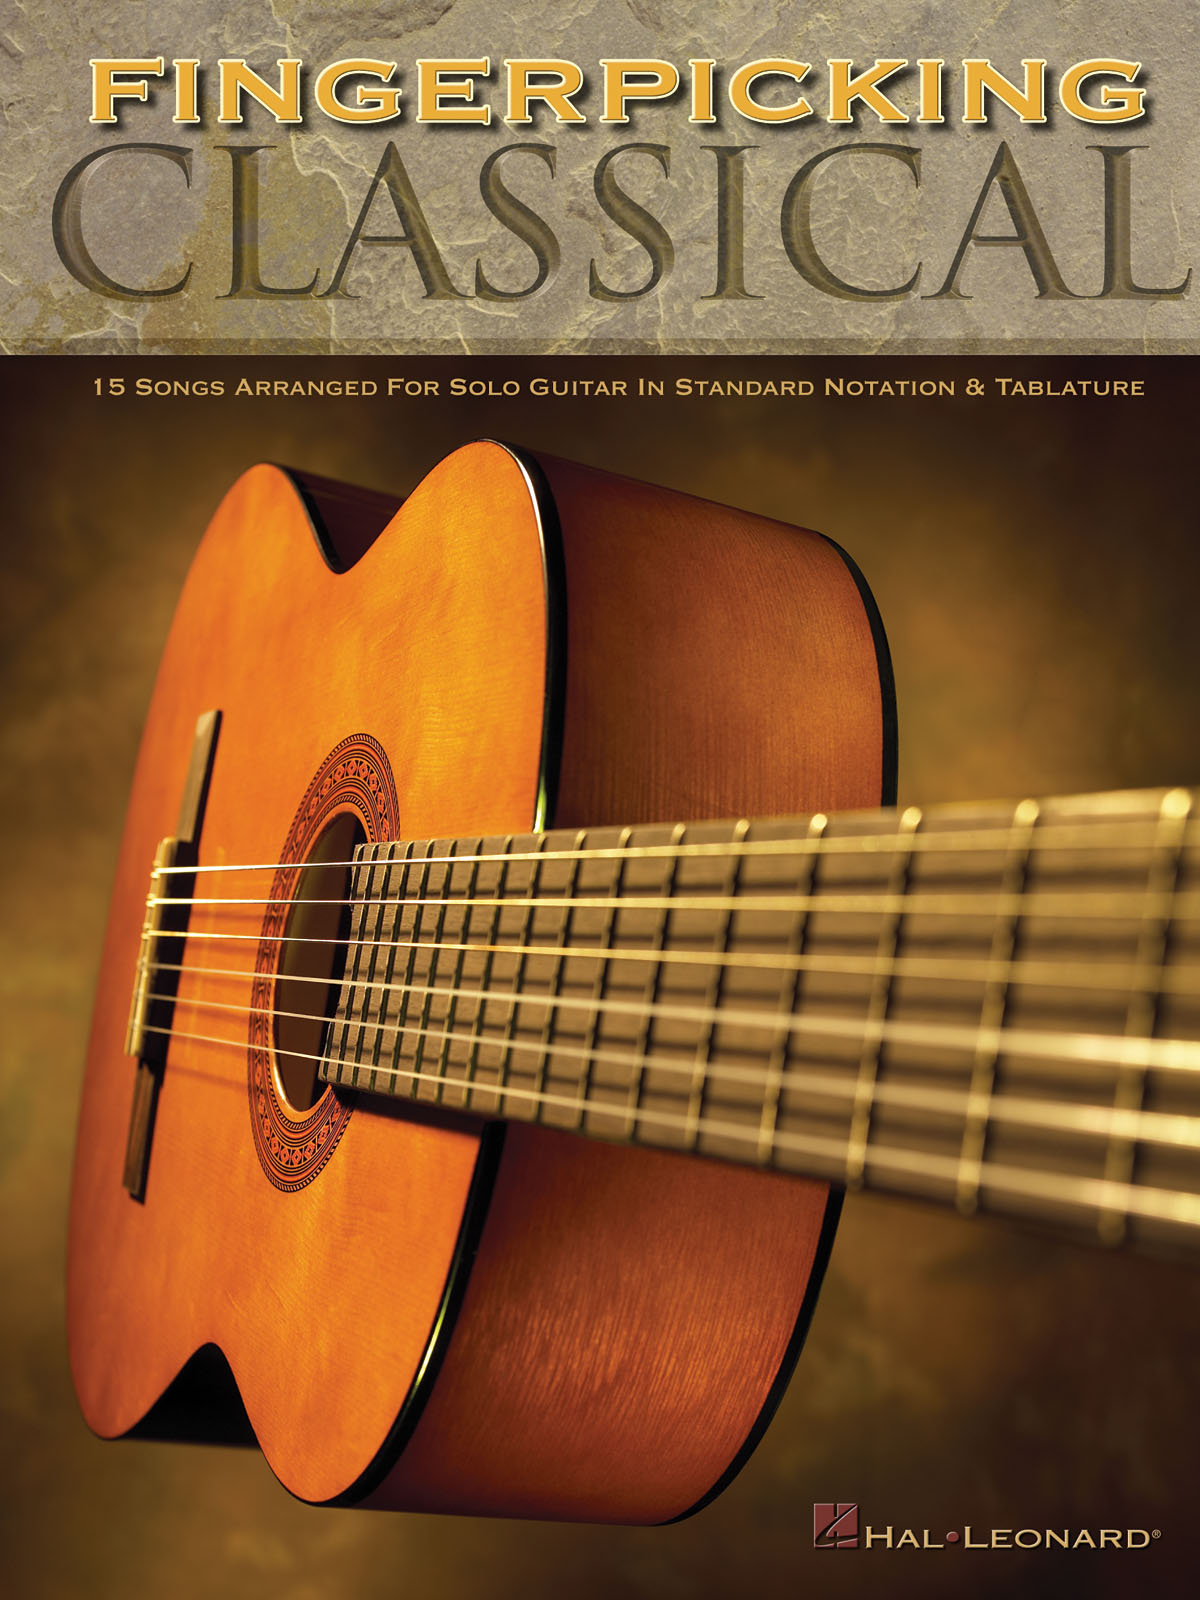 classical guitar mp3 download